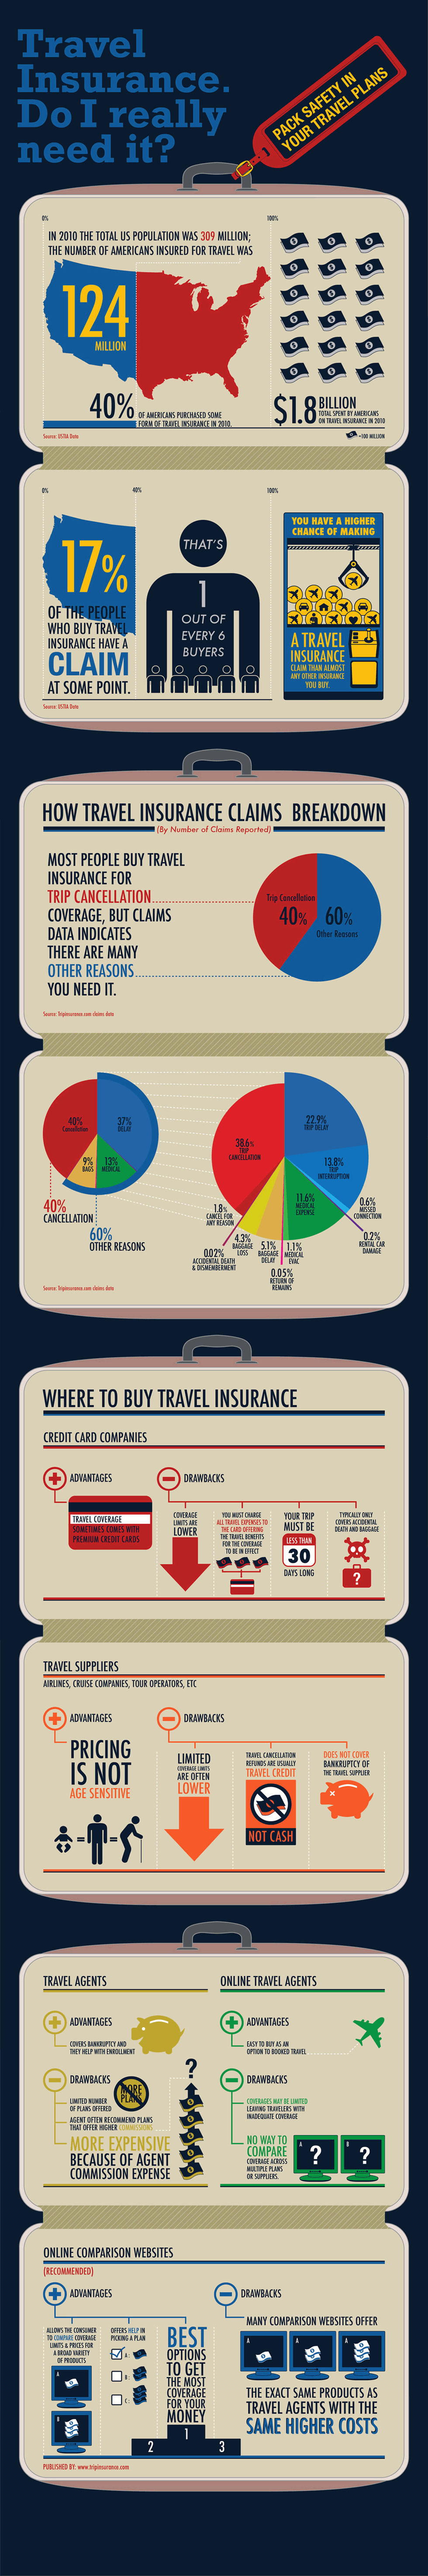  Travel insurance